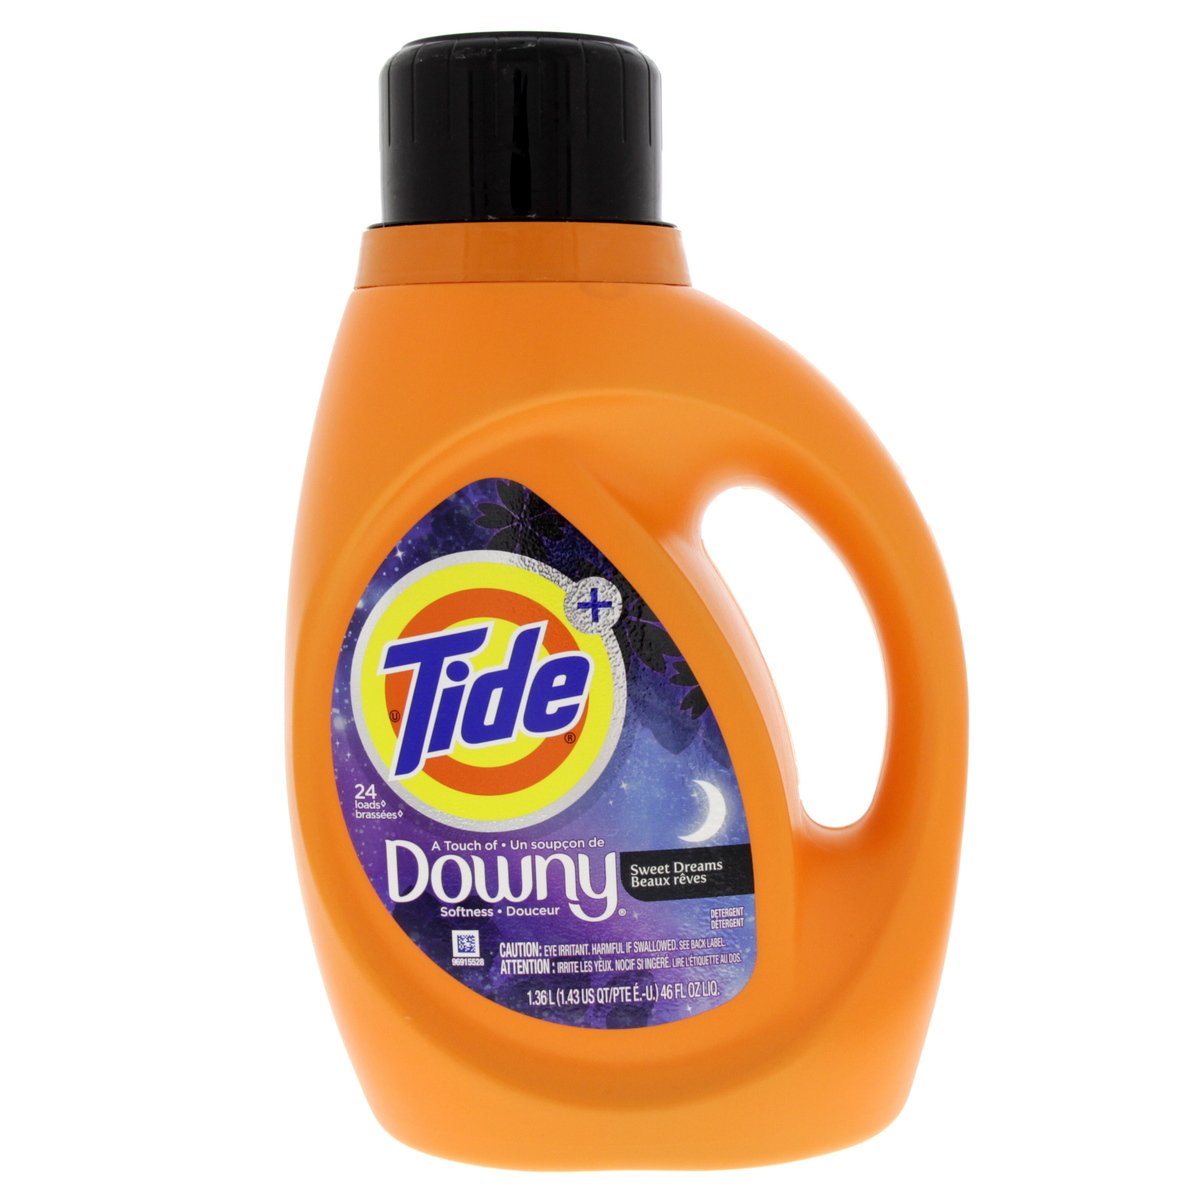 Tide Downy Liquid Detergent Sweet Dreams 1.36Litre